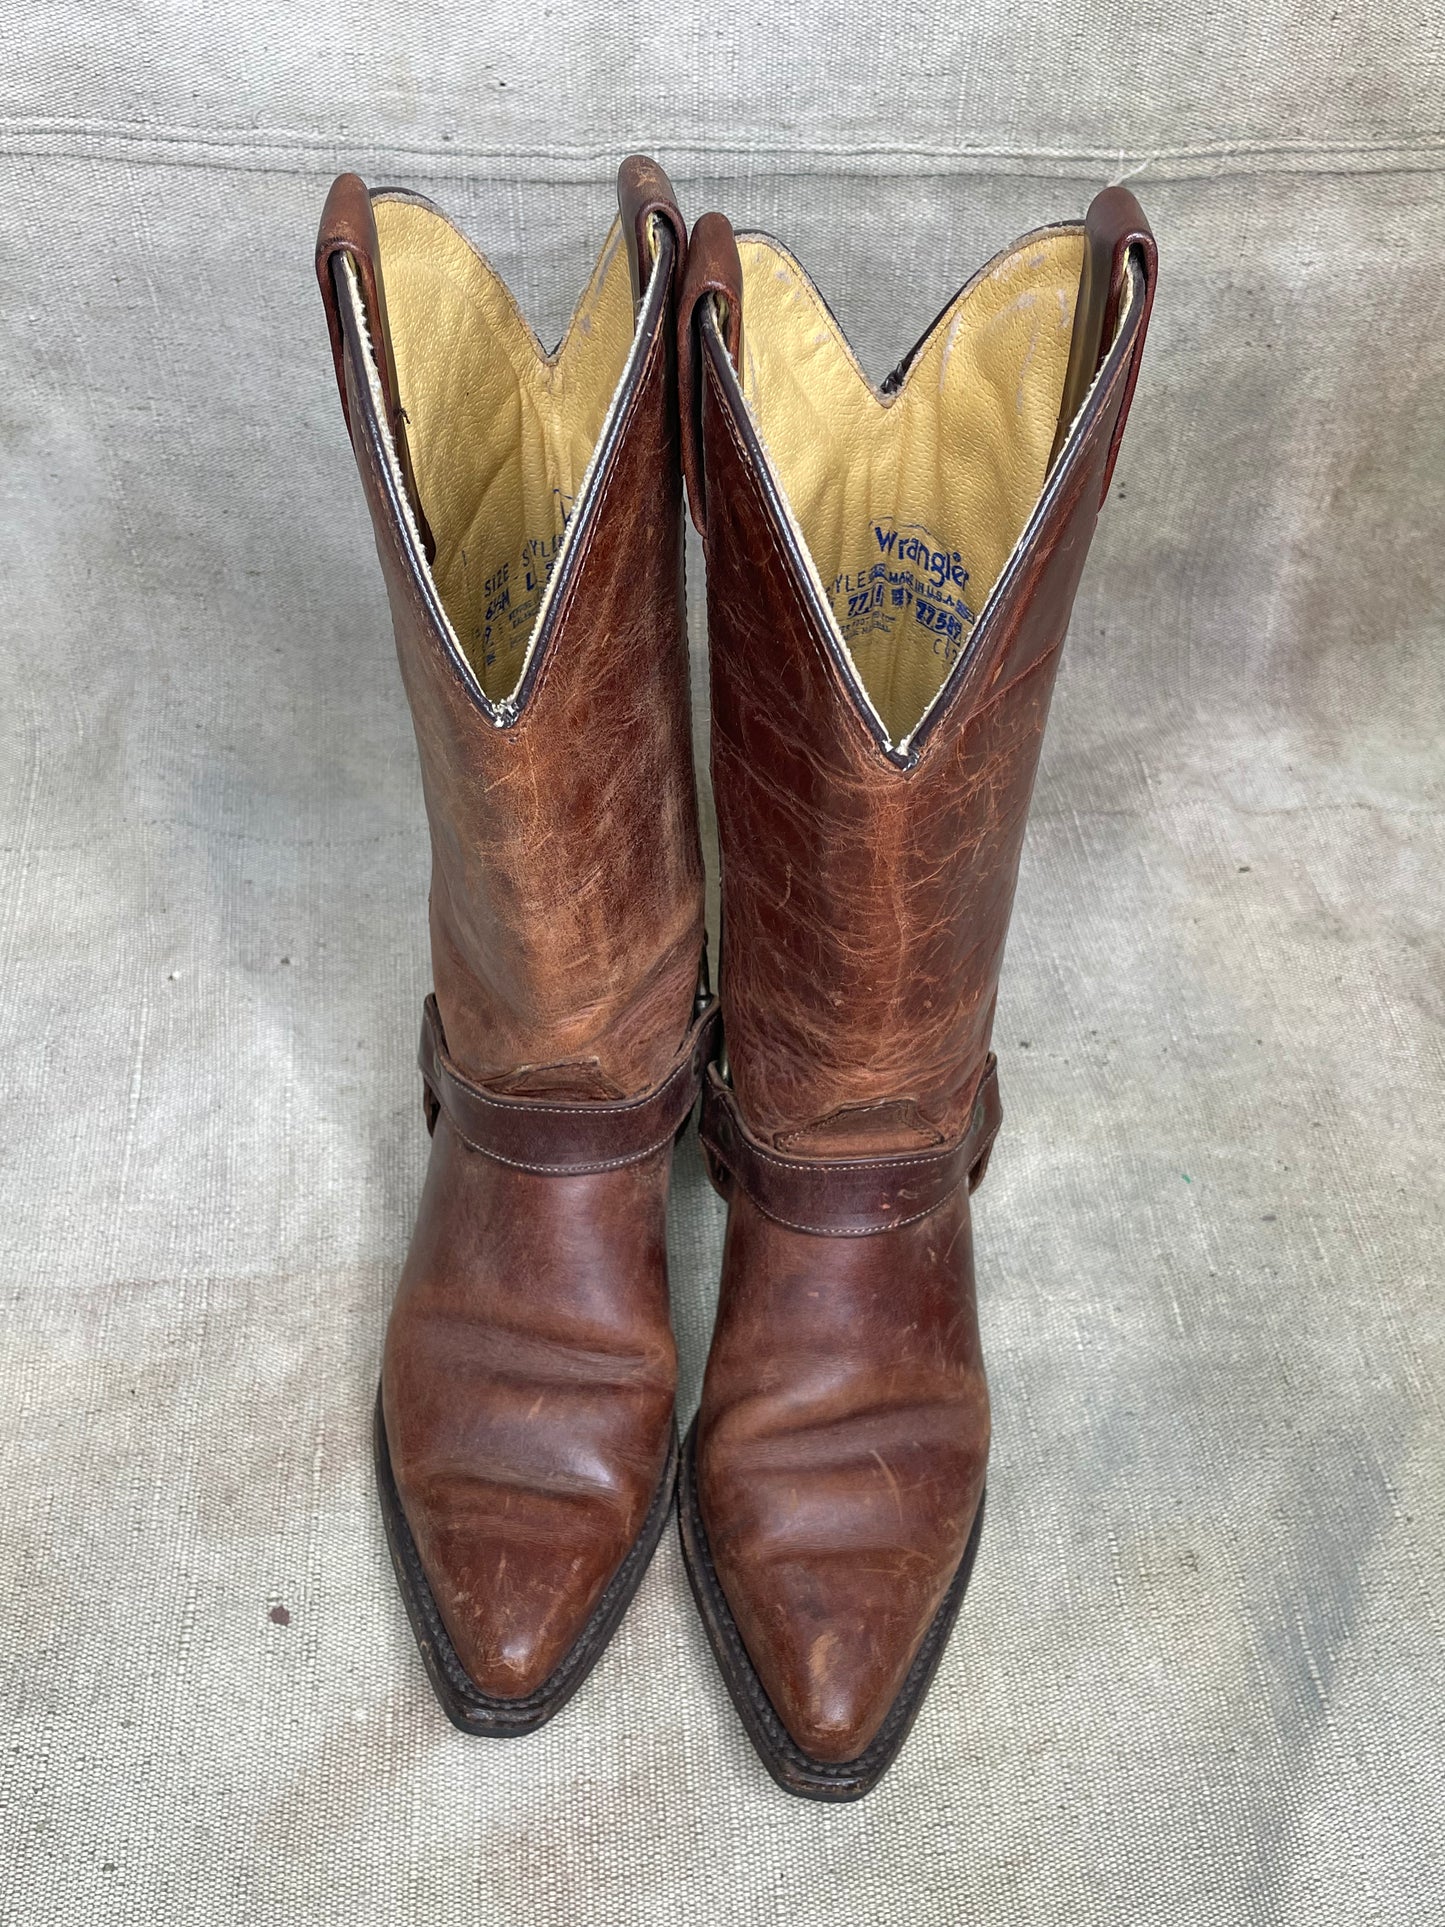 Vintage 6 1/2 M Women’s Wrangler Leather Harness Cowboy Boots